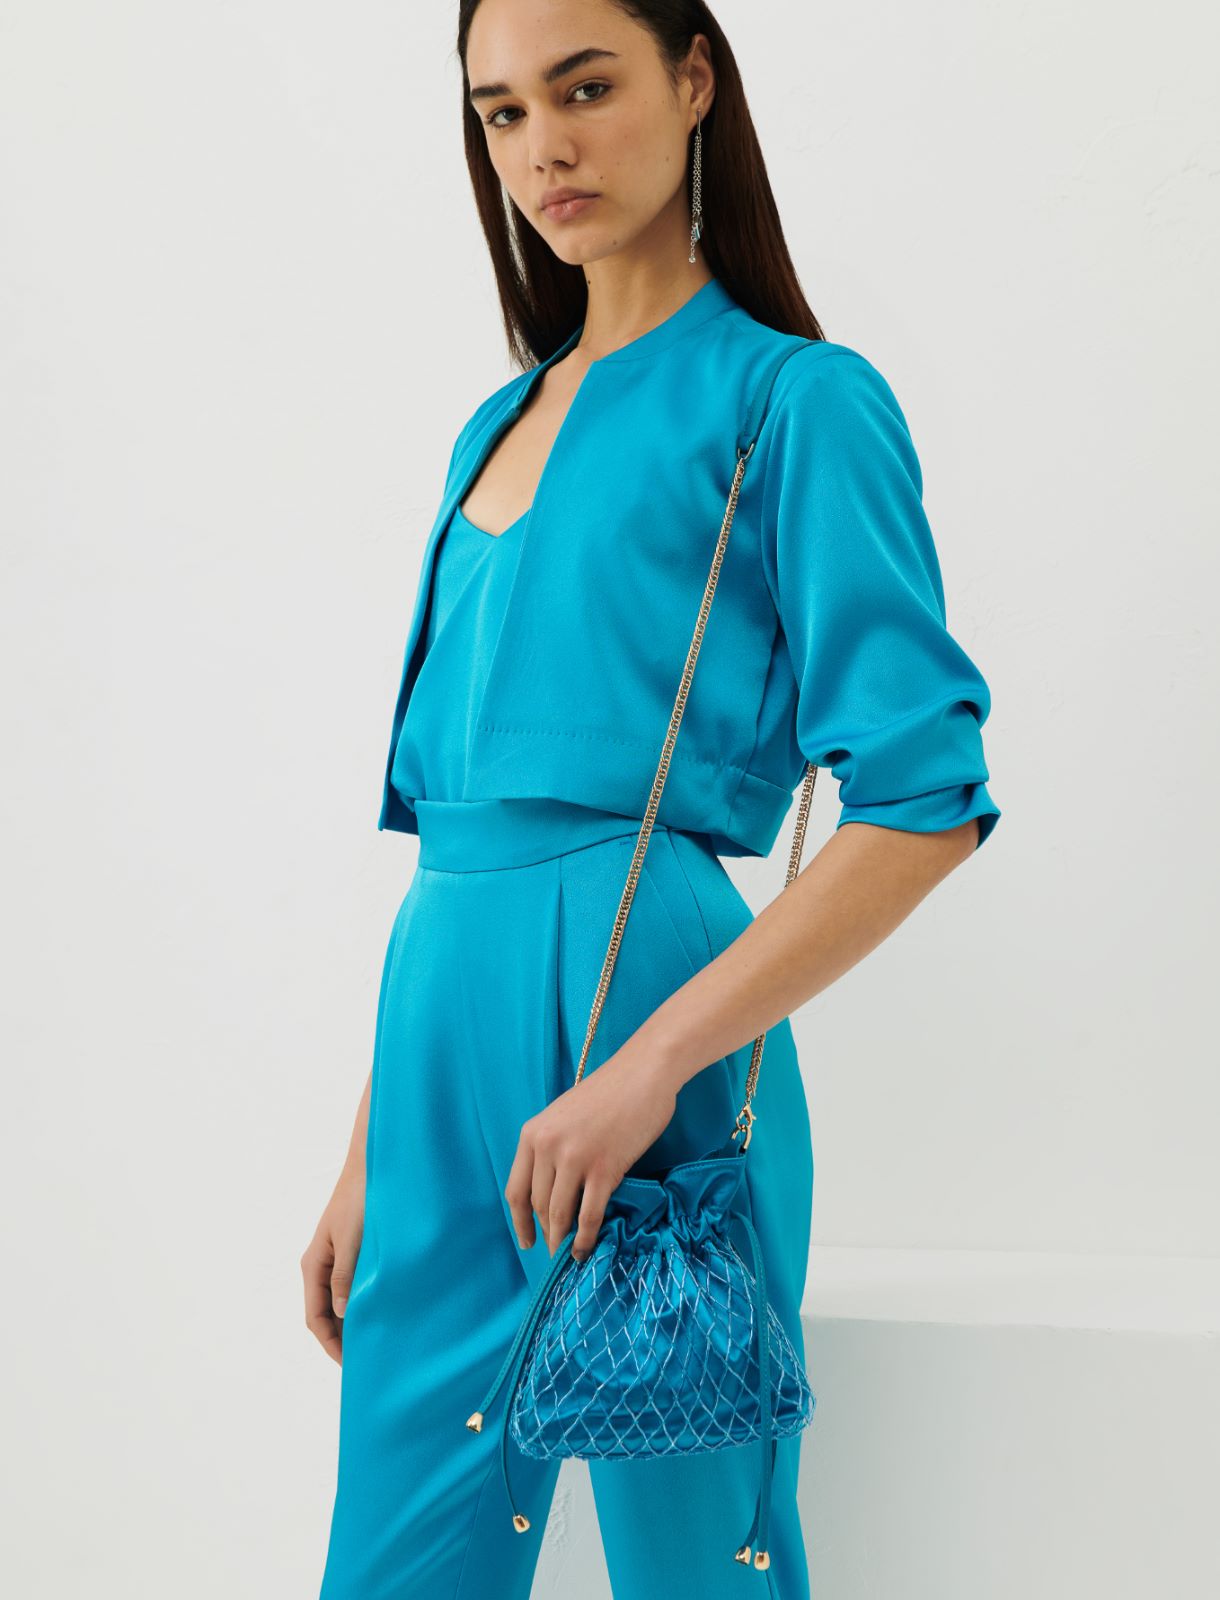 Mesh bag - Turquoise - Marina Rinaldi - 4